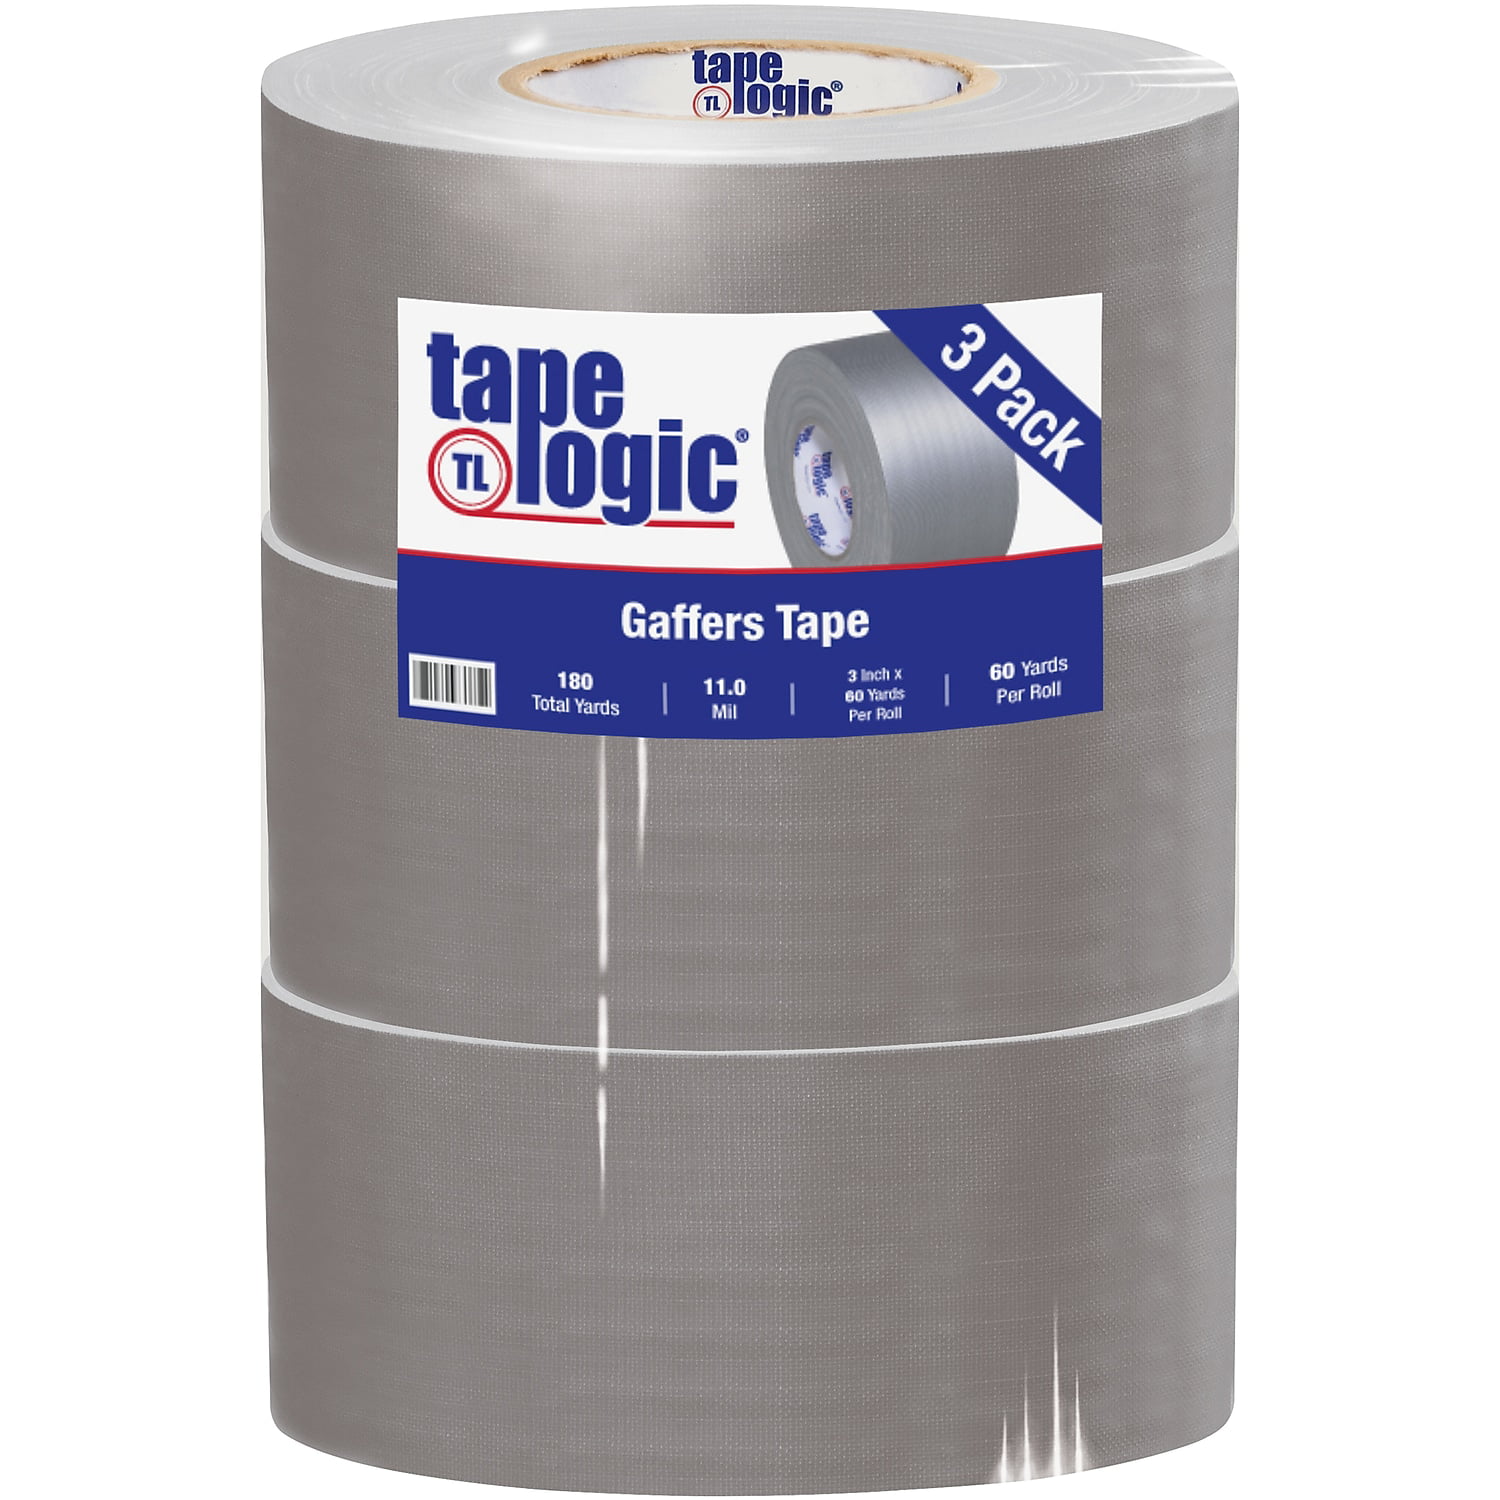 Tape Logic T98818gr3pk 3 In. X 60 Yards Gray Tape Logic 11 Mil Gaffers Tape, Pack Of 3 - 3 Per Case